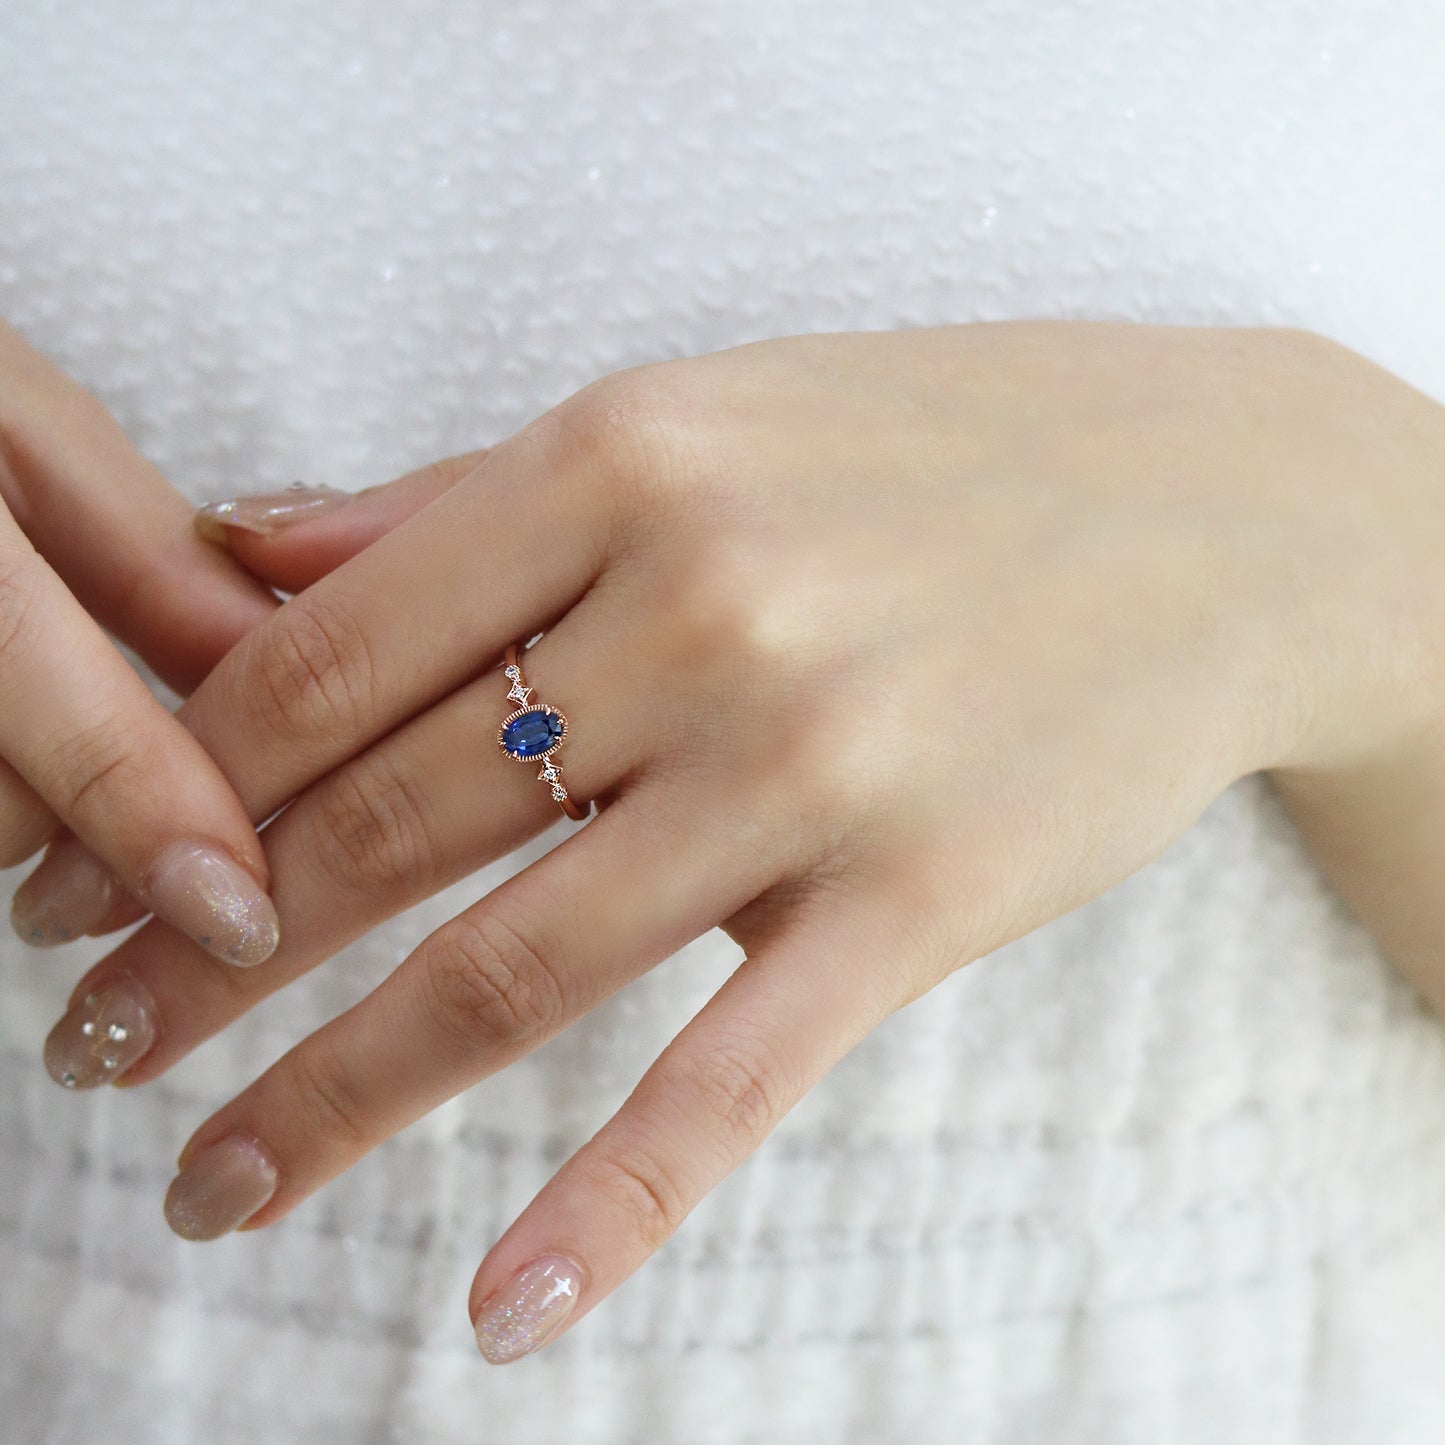 18k玫瑰金復古藍寶石鑽石戒指在中指上 18k Rose Gold Vintage Sapphire Diamond Ring on middle finger